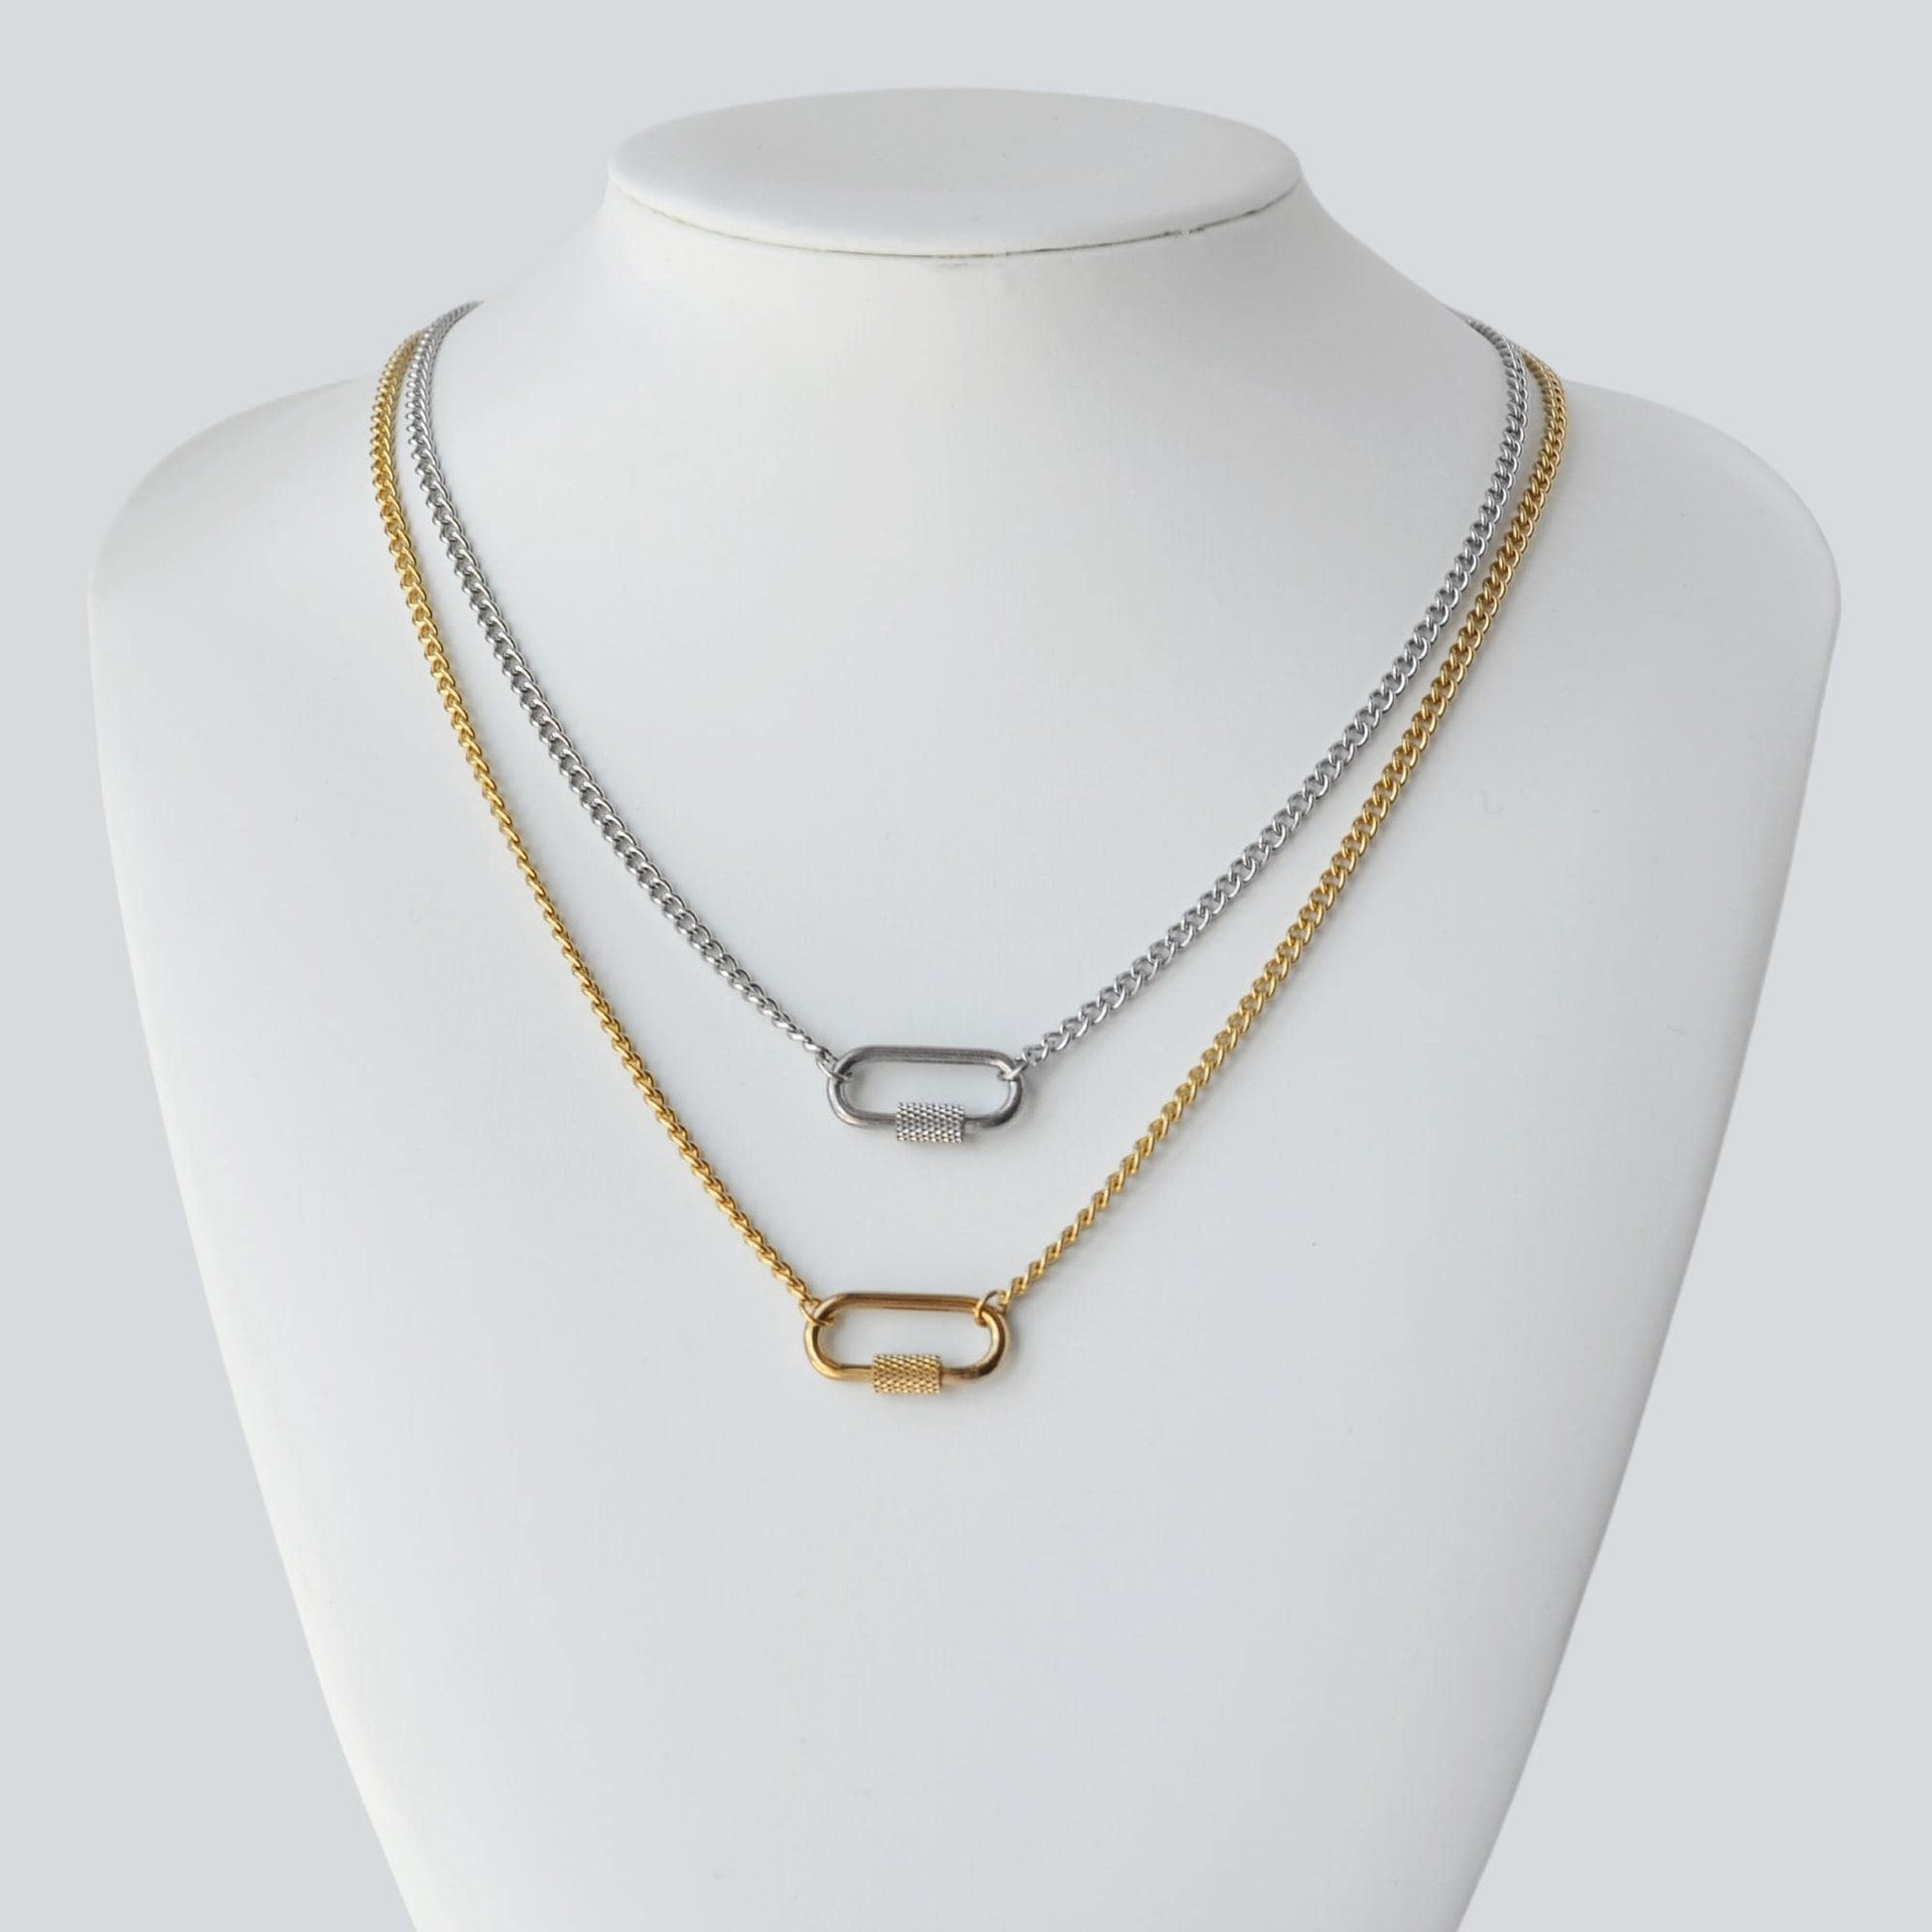 Silver or Gold Carabiner Pendant Necklace For Women or Men - Boutique Wear  RENN | Ketten mit Anhänger